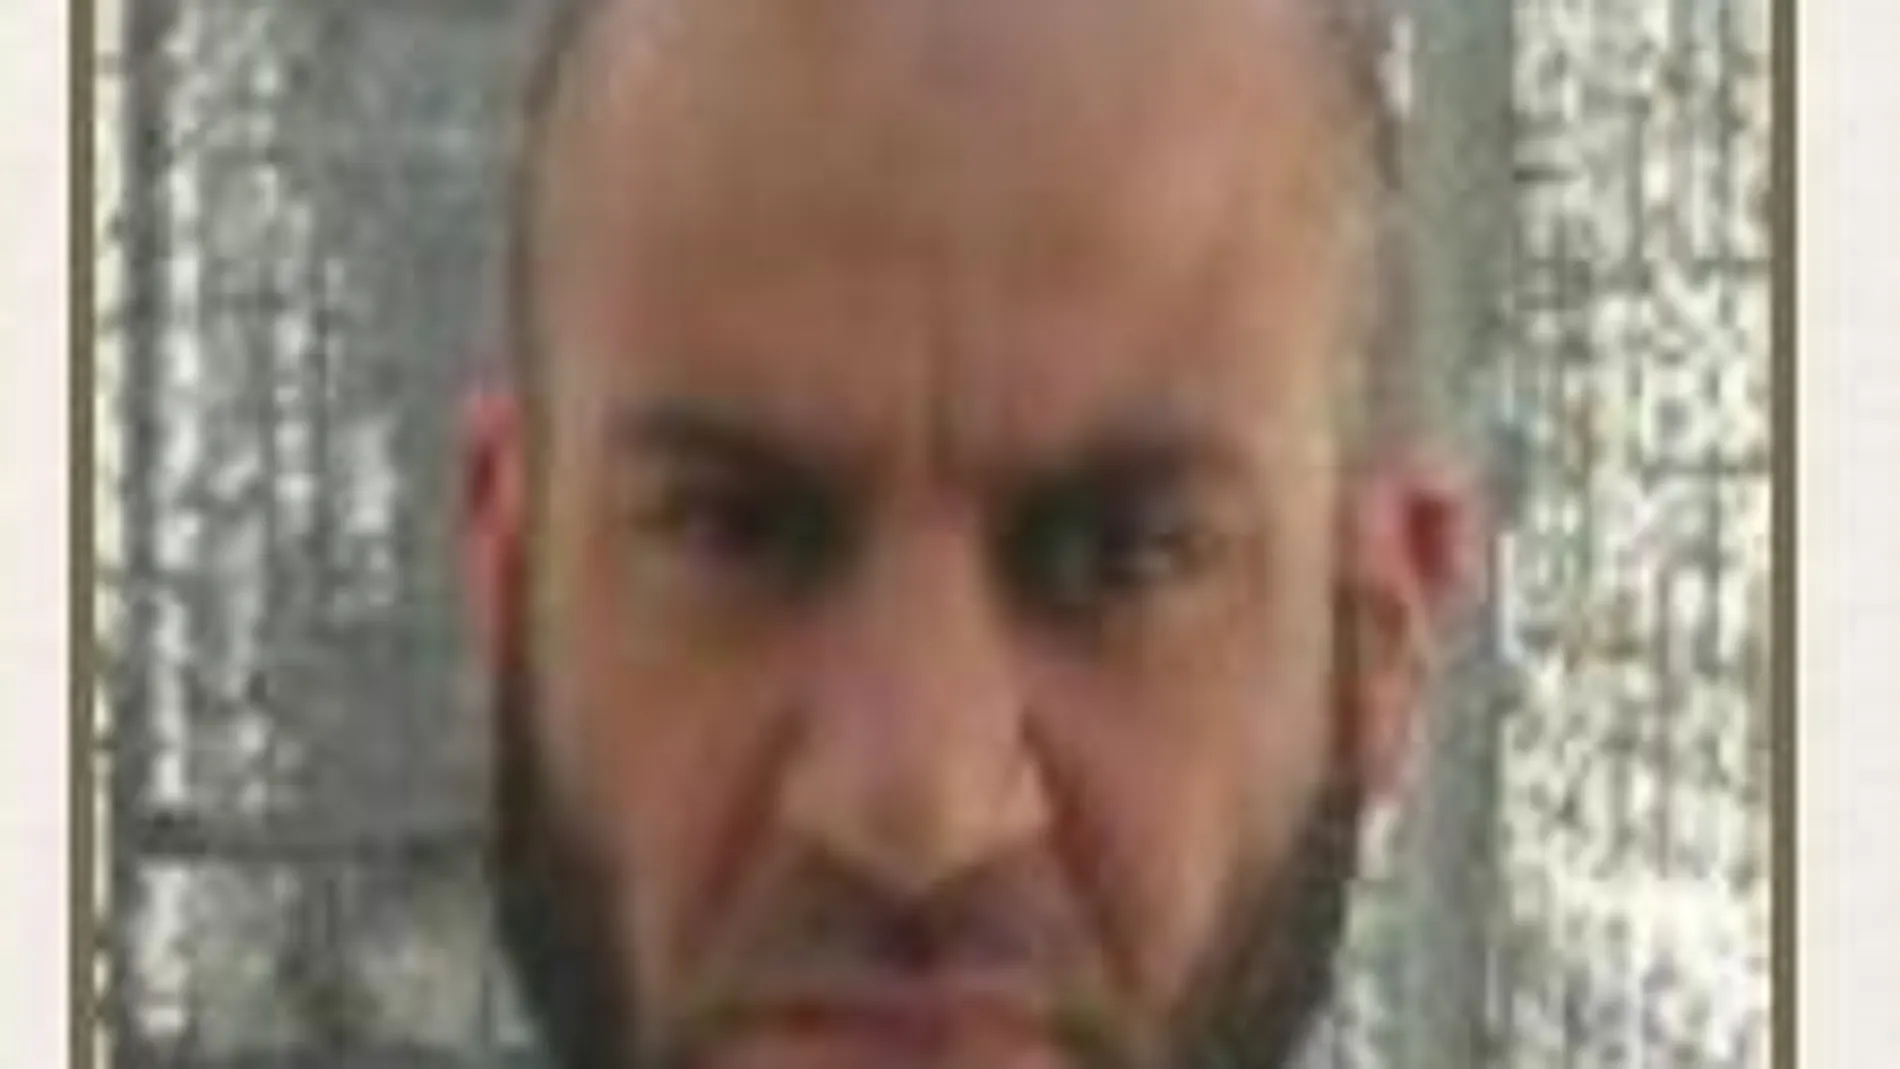 Ibrahim Hashimi, "califa" del Estado Islámico